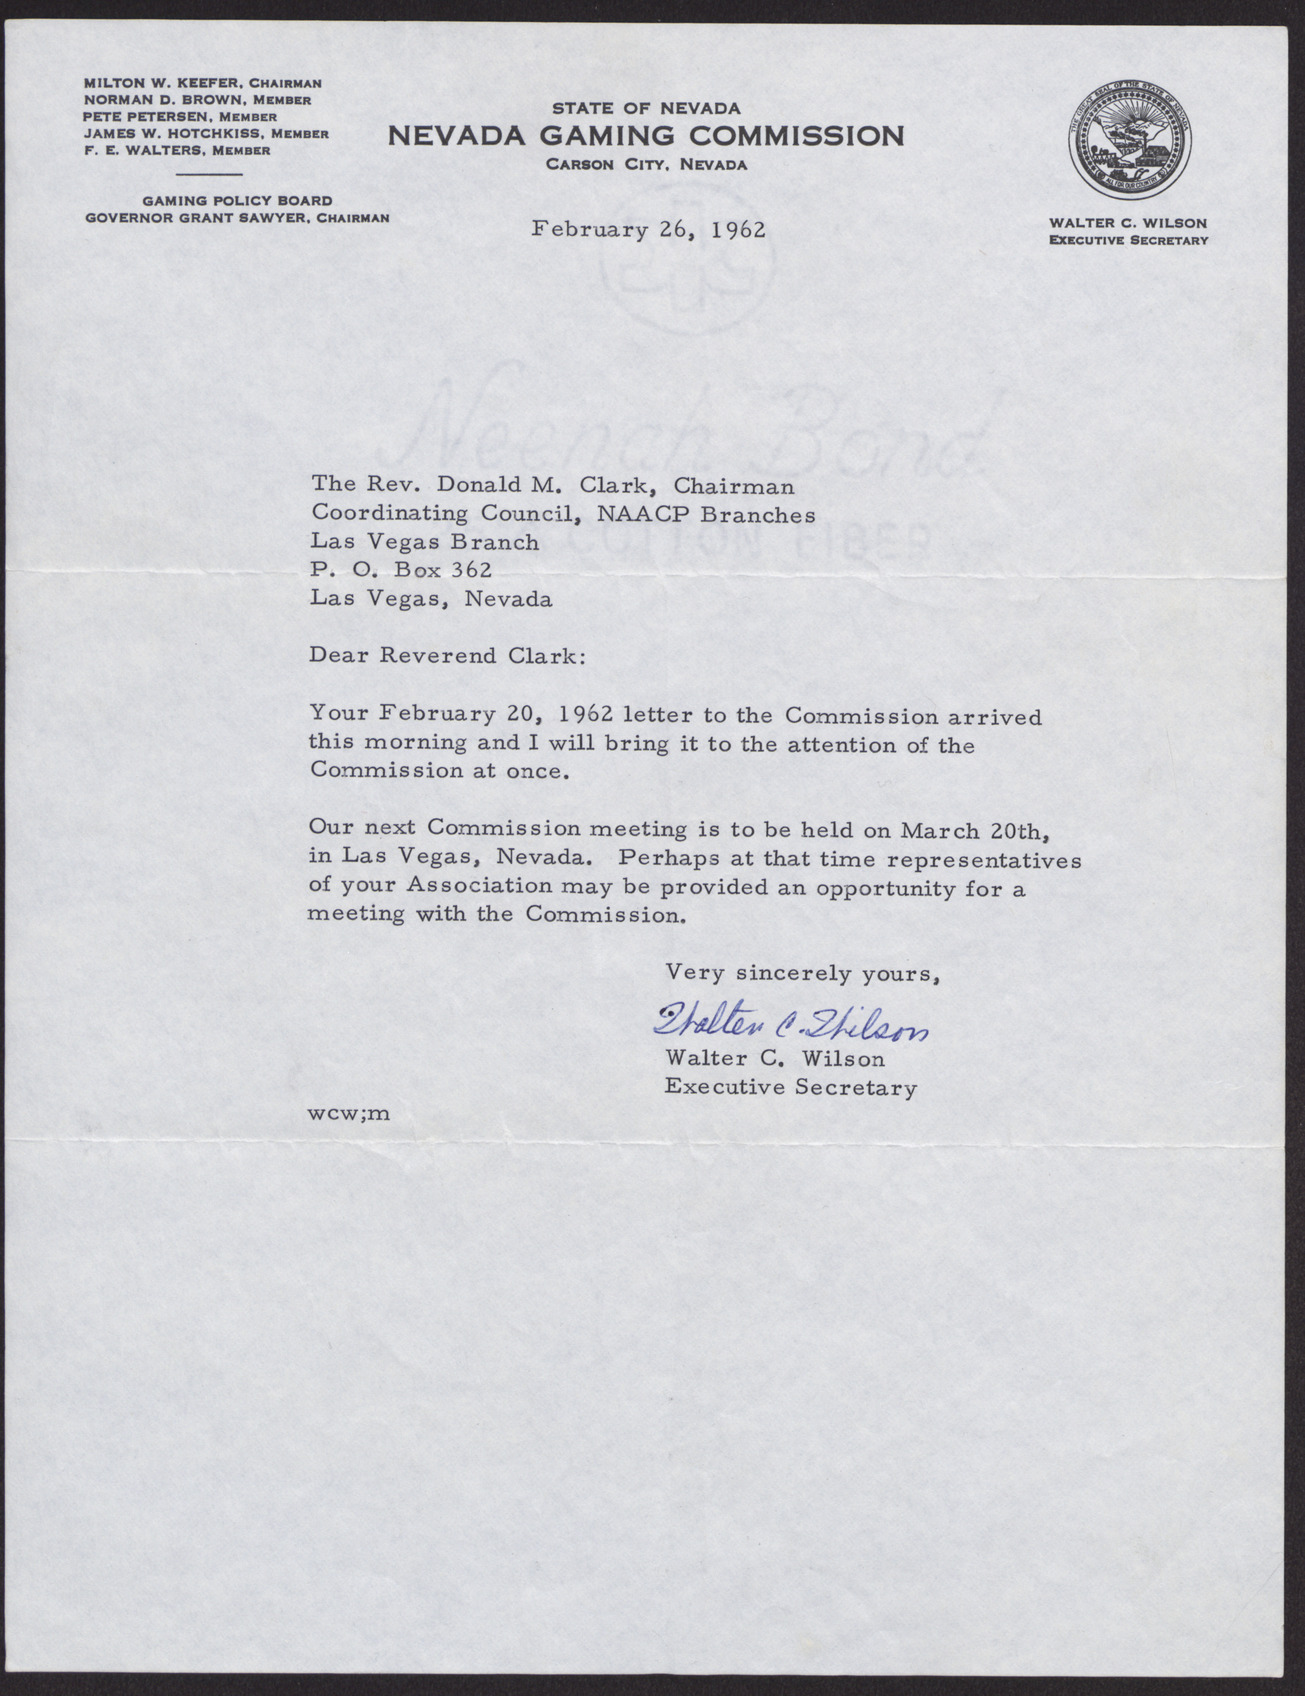 Letter to Rev. Donald M. Clark from Walter C. Wilson, February 26, 1962